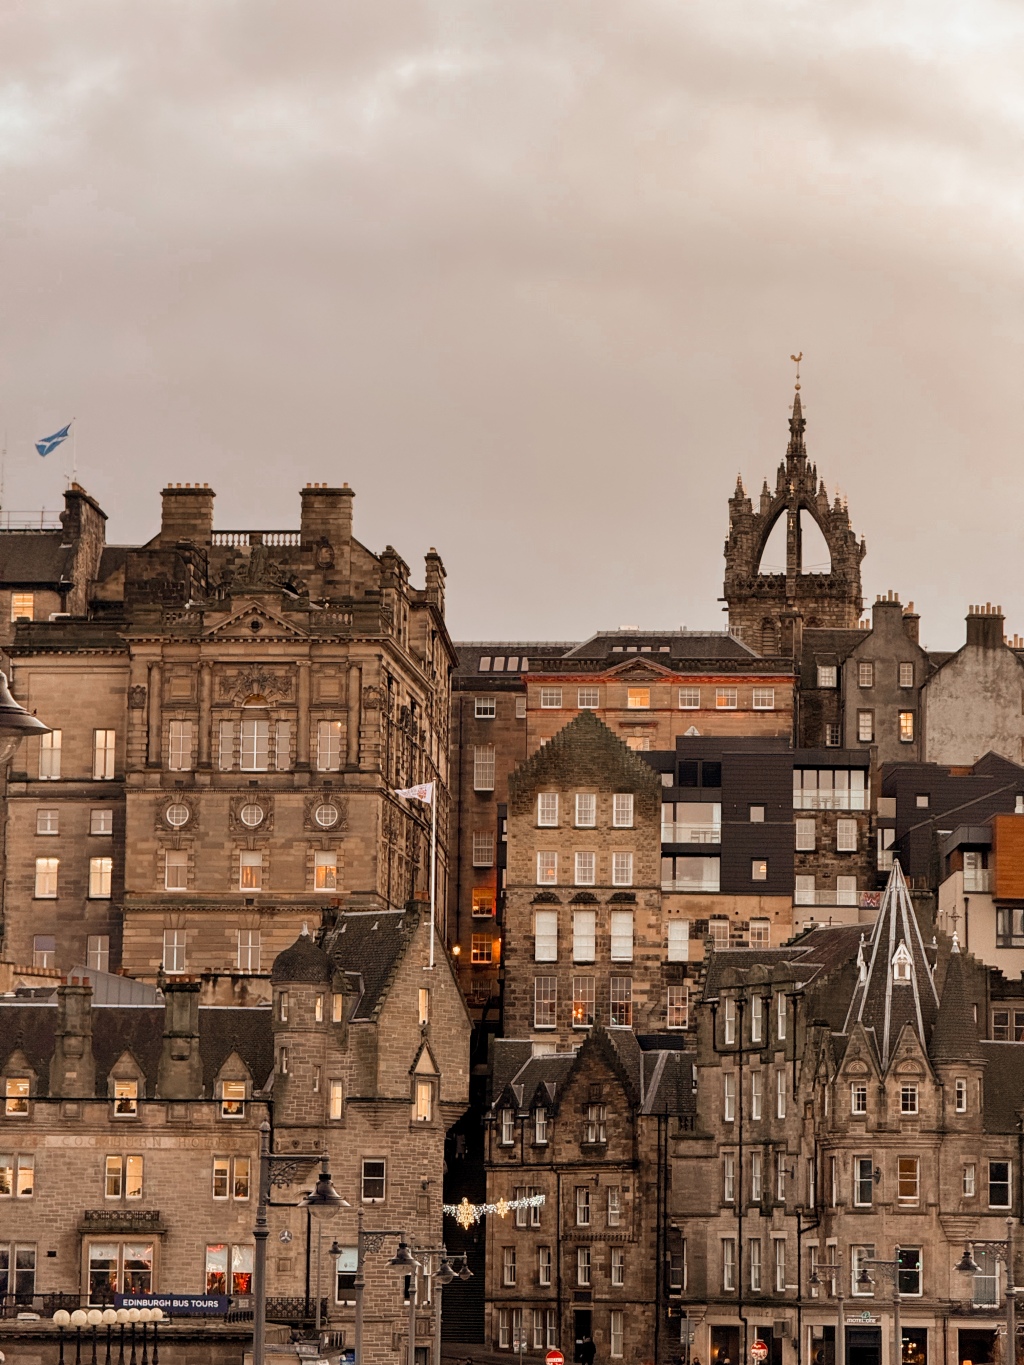 My first visit to Edinburgh